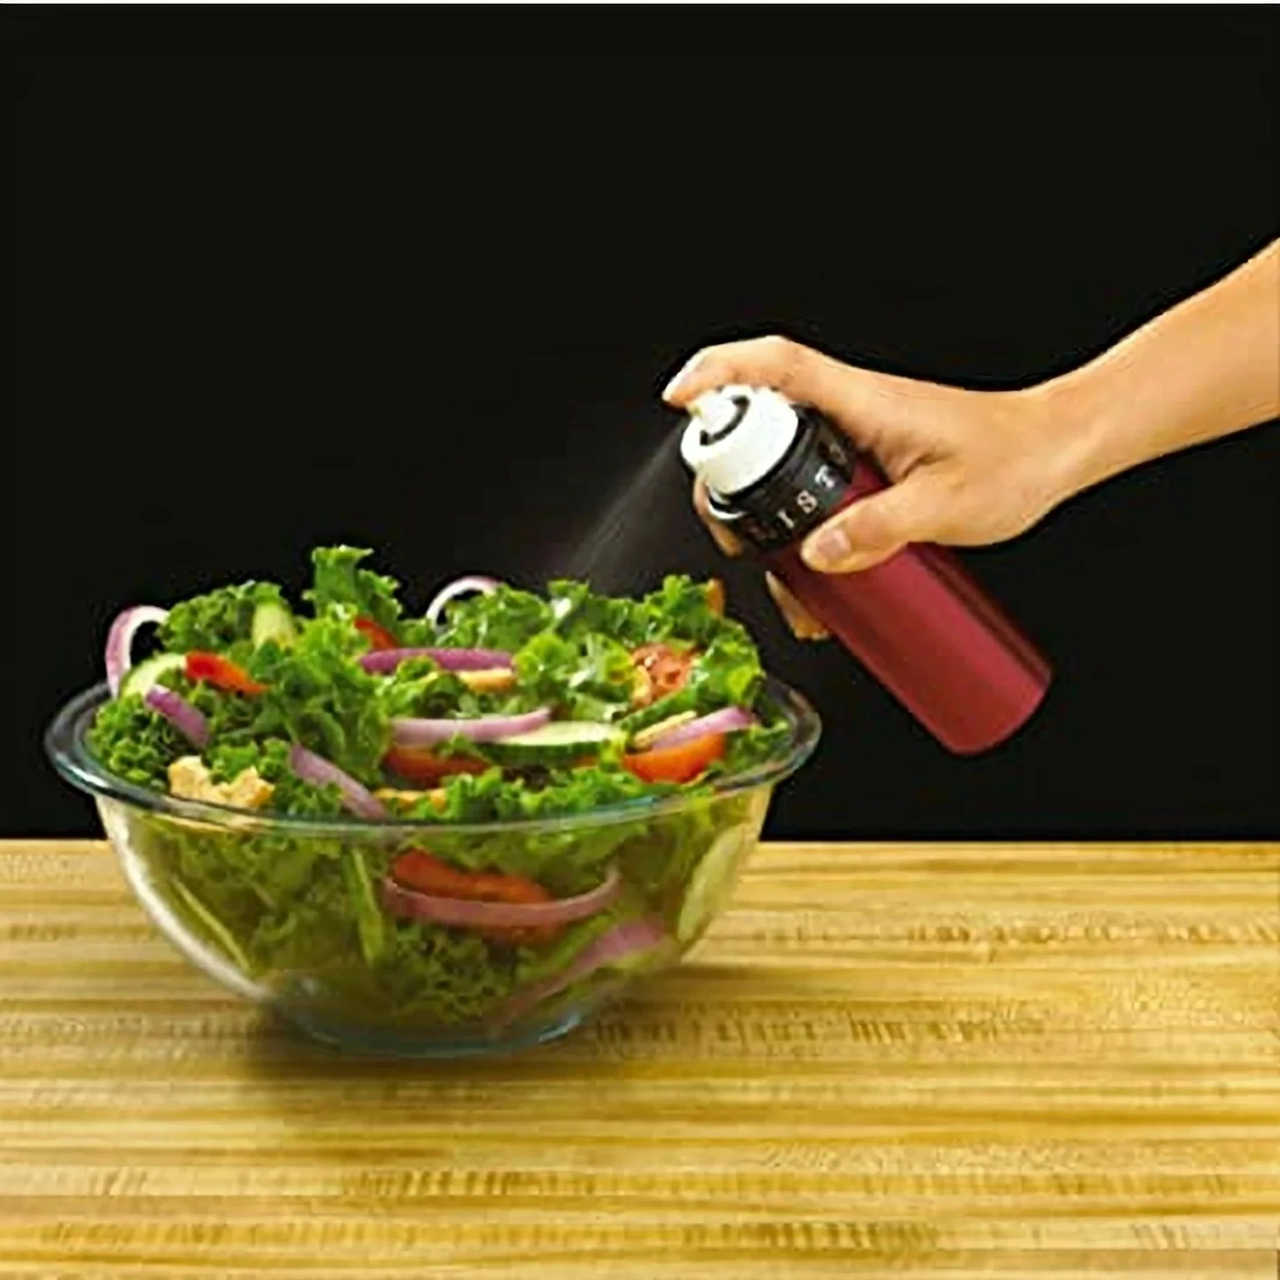 Using the Misto sprayer to lightly dress a fresh salad